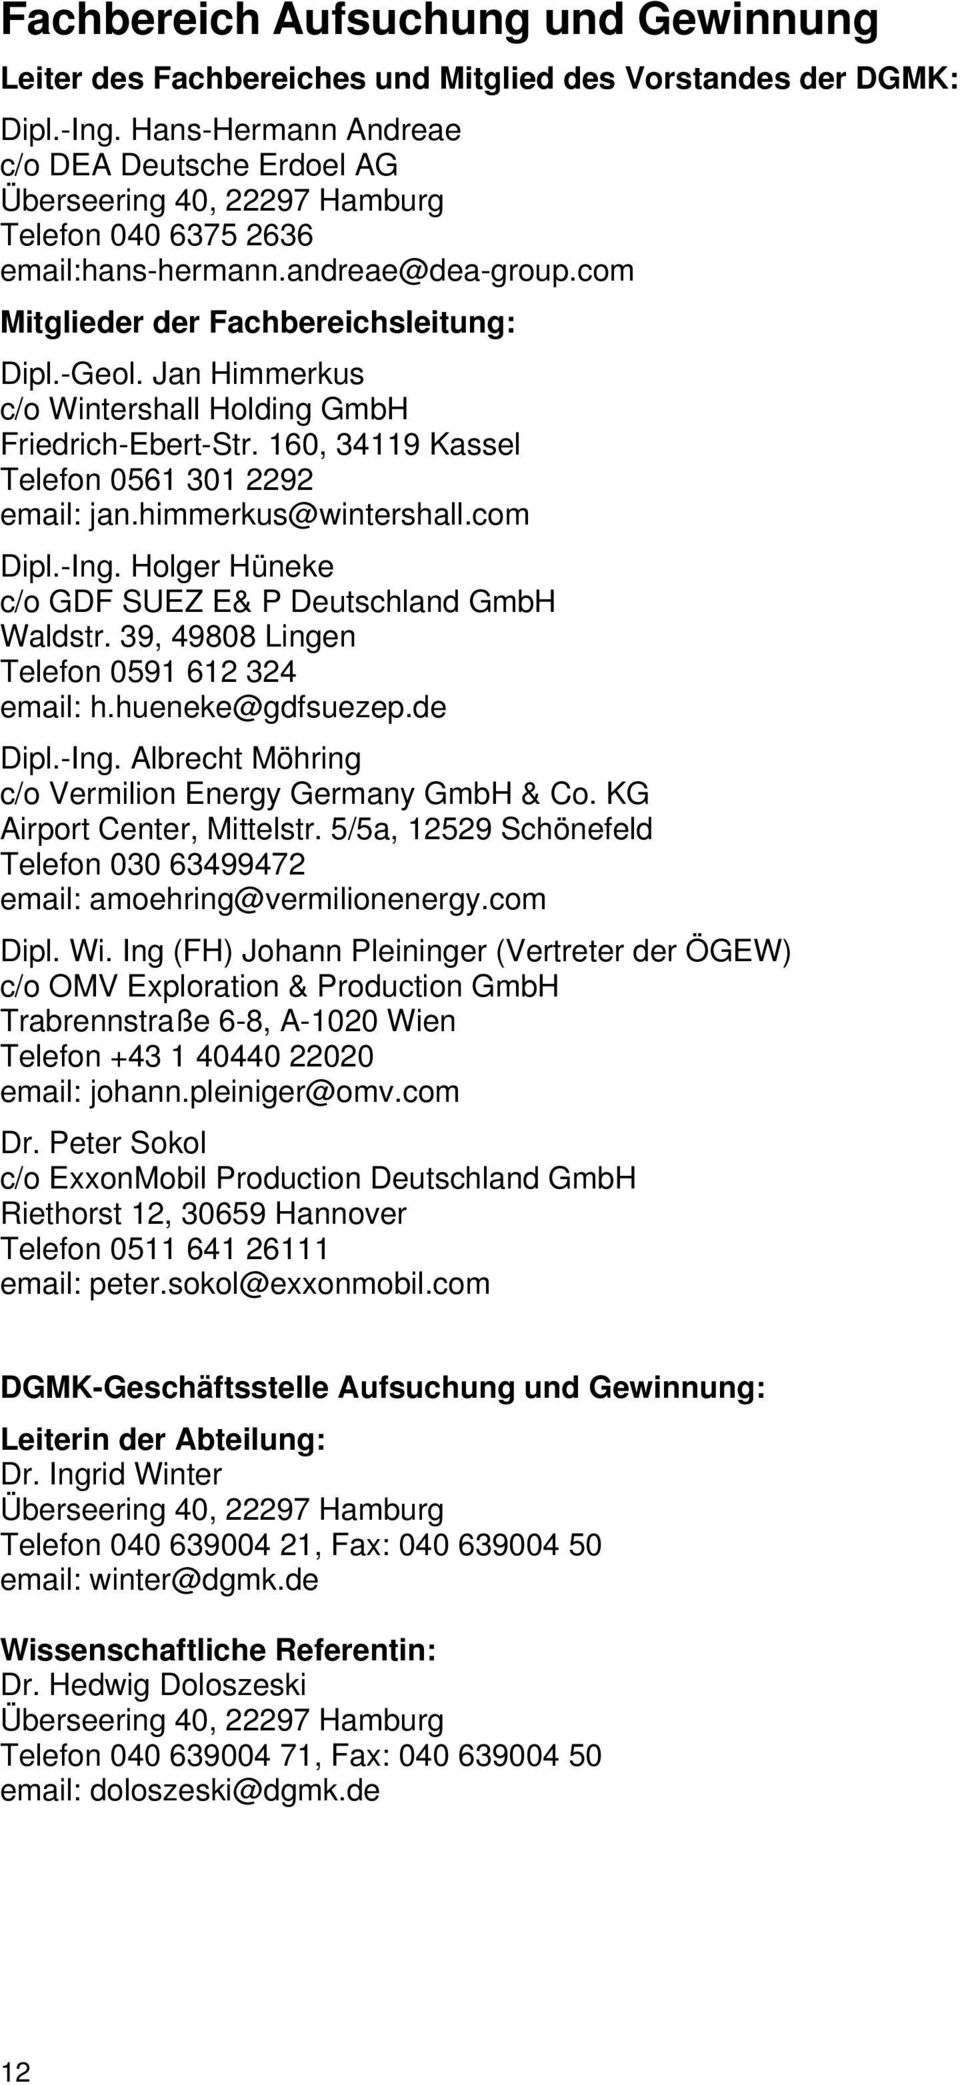 Jan Himmerkus c/o Wintershall Holding GmbH Friedrich-Ebert-Str. 160, 34119 Kassel Telefon 0561 301 2292 email: jan.himmerkus@wintershall.com Dipl.-Ing.